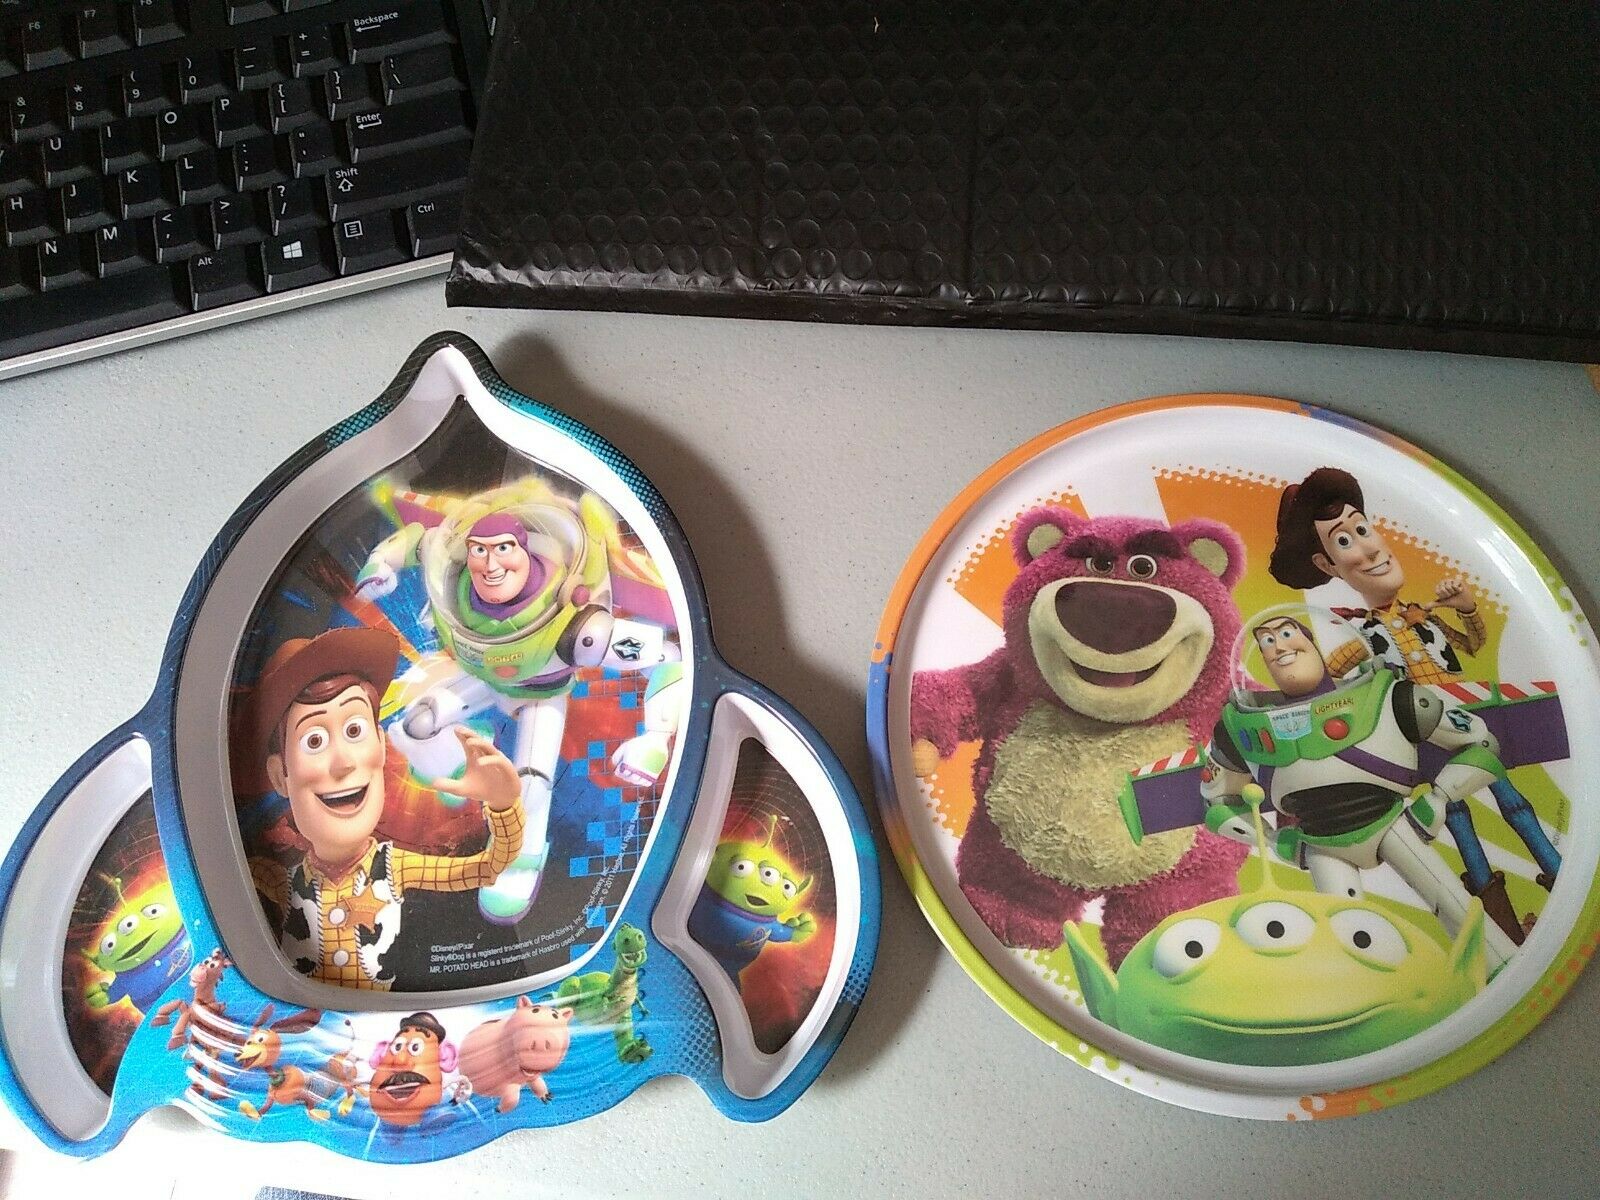 Disney Pixar Toy Story Rocket Shaped Plate & Toy Story 3 Plate By Zak Designs